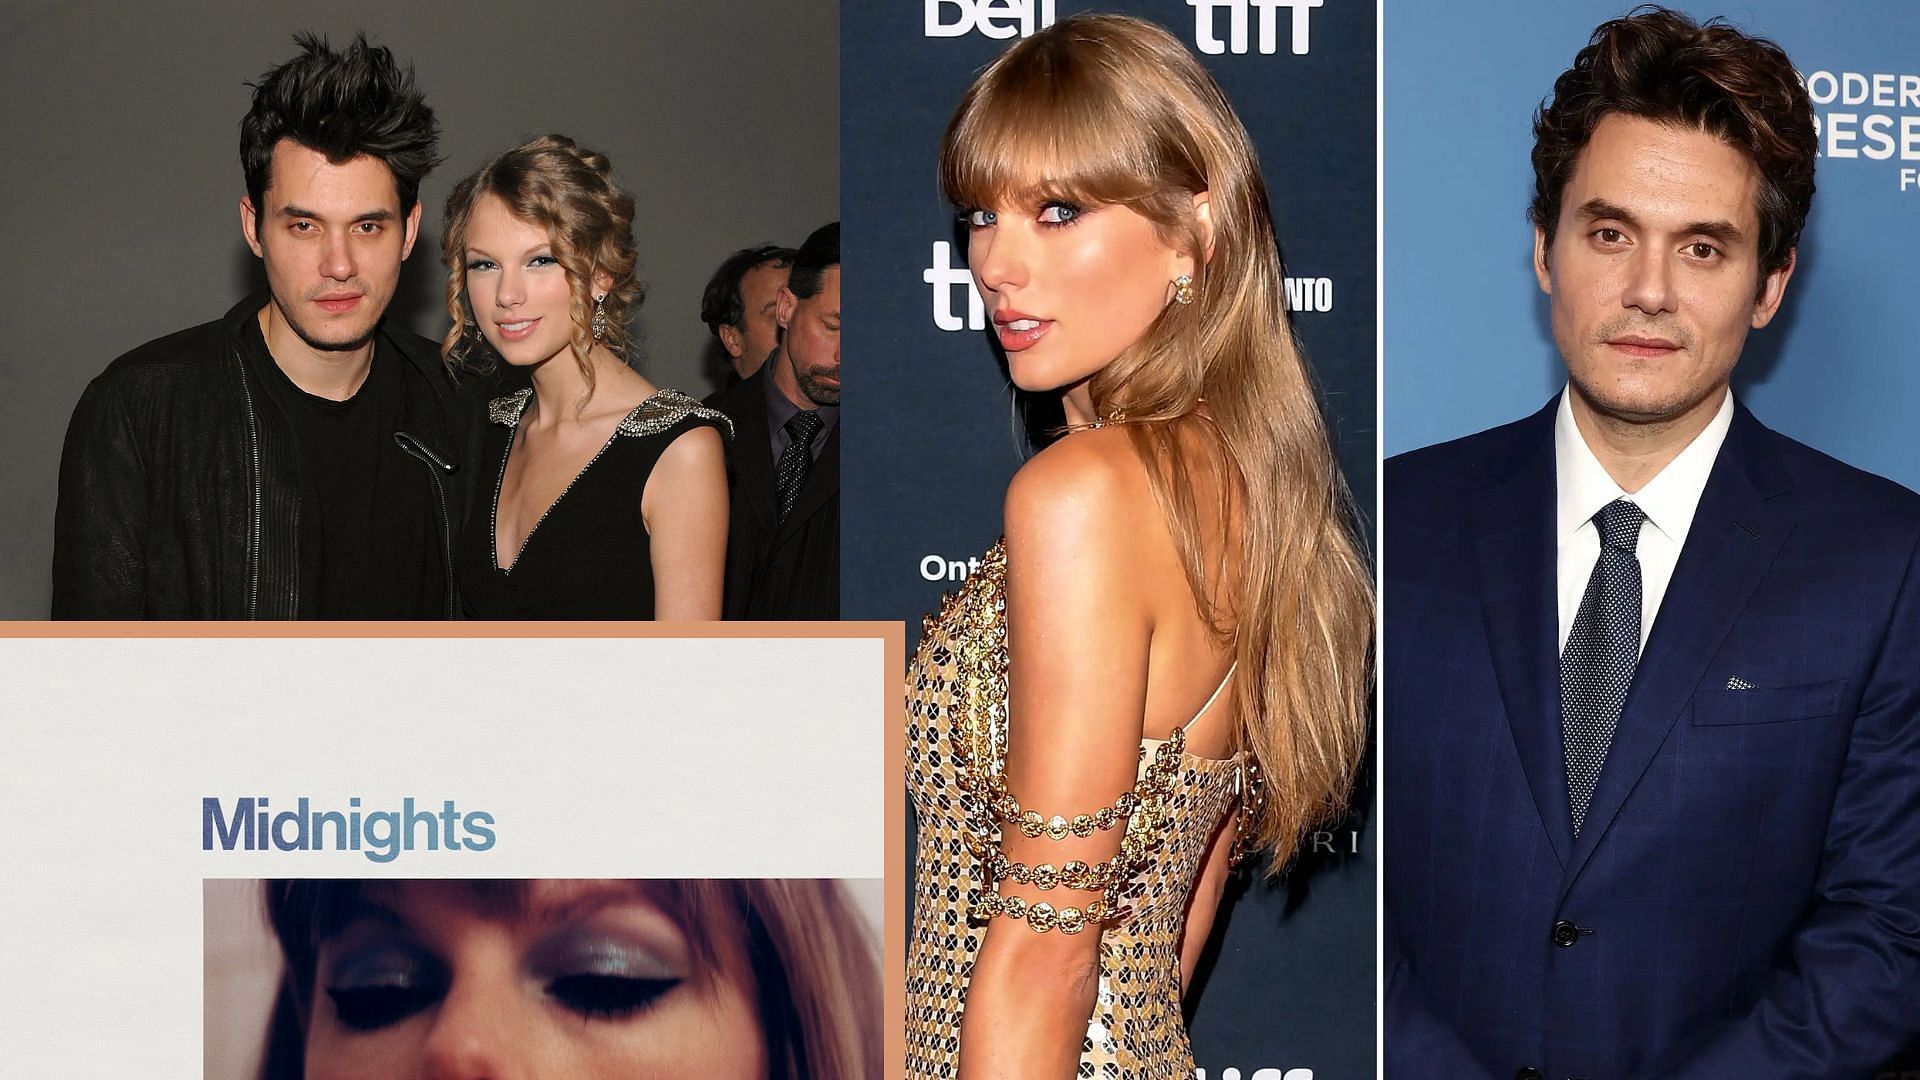 Internet goes after John Mayer after Swift released a regret song about him (image via Shuttershock)